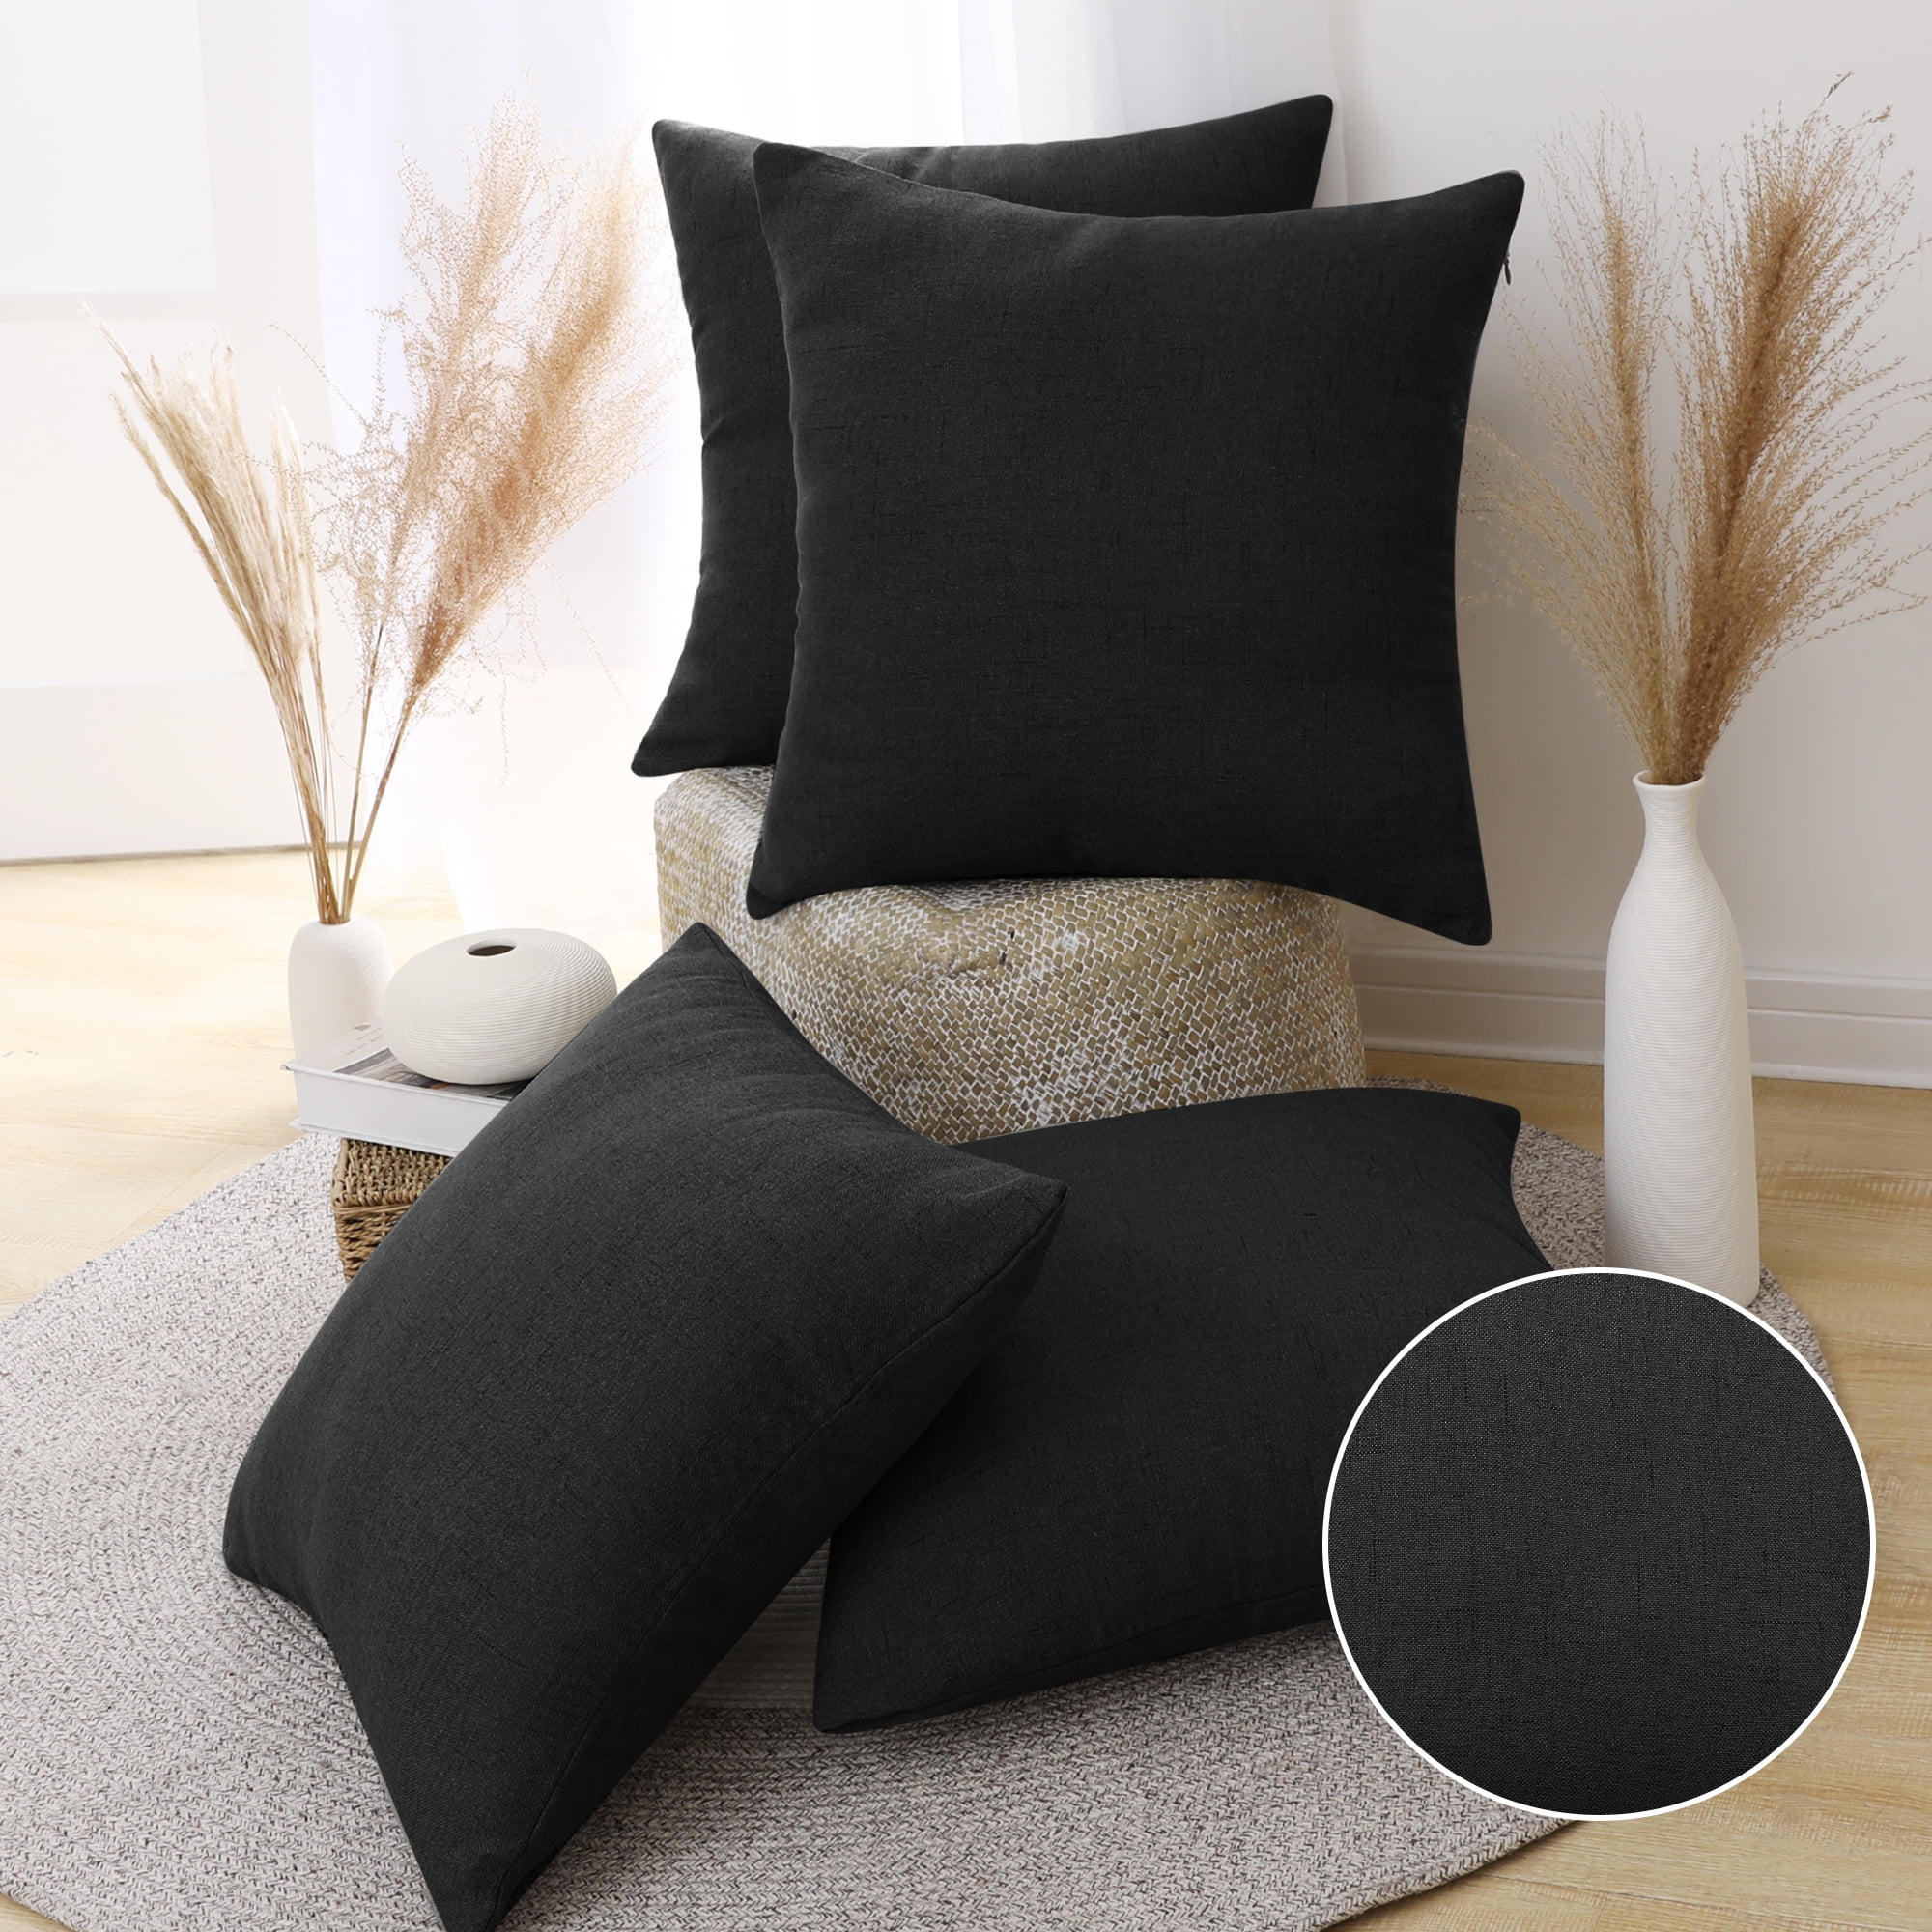 Pillow Cover Case Waist Cushion Linen Square Sofa Home Decor Throw Bed Car Gift 